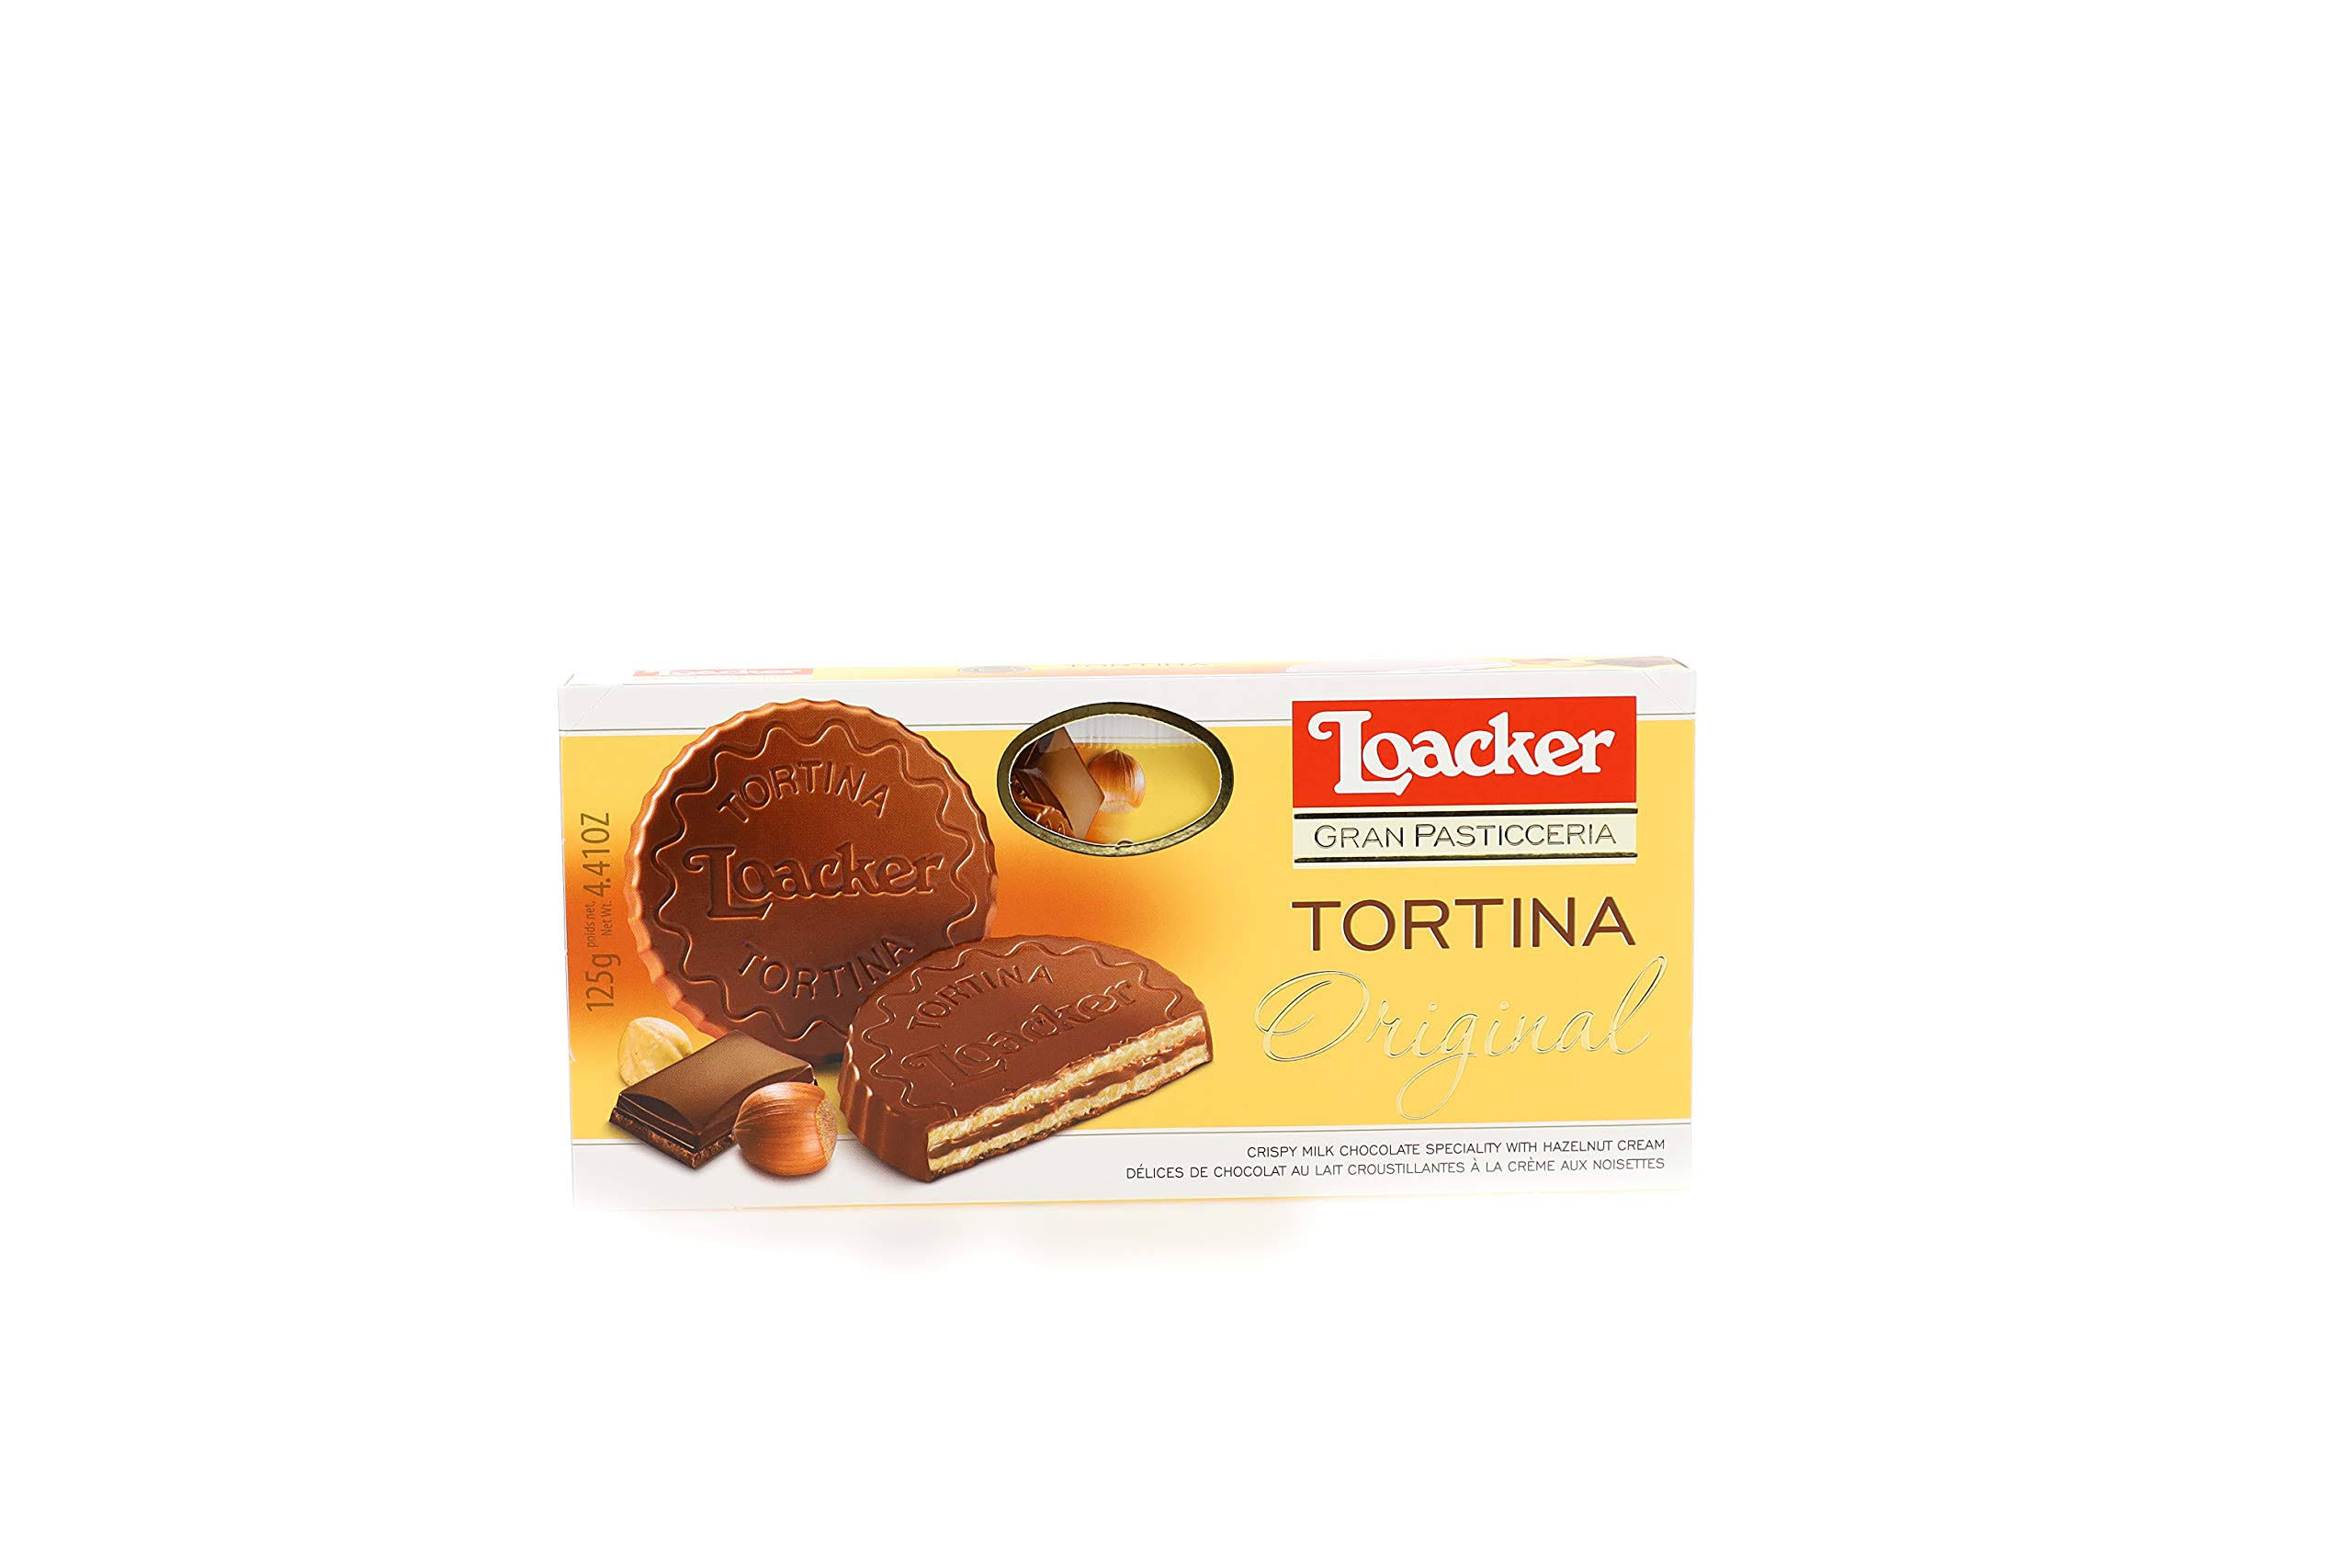 Loacker Tortina Premium Chocolate Coated Wafer, Original 125g/4.41 OZ.